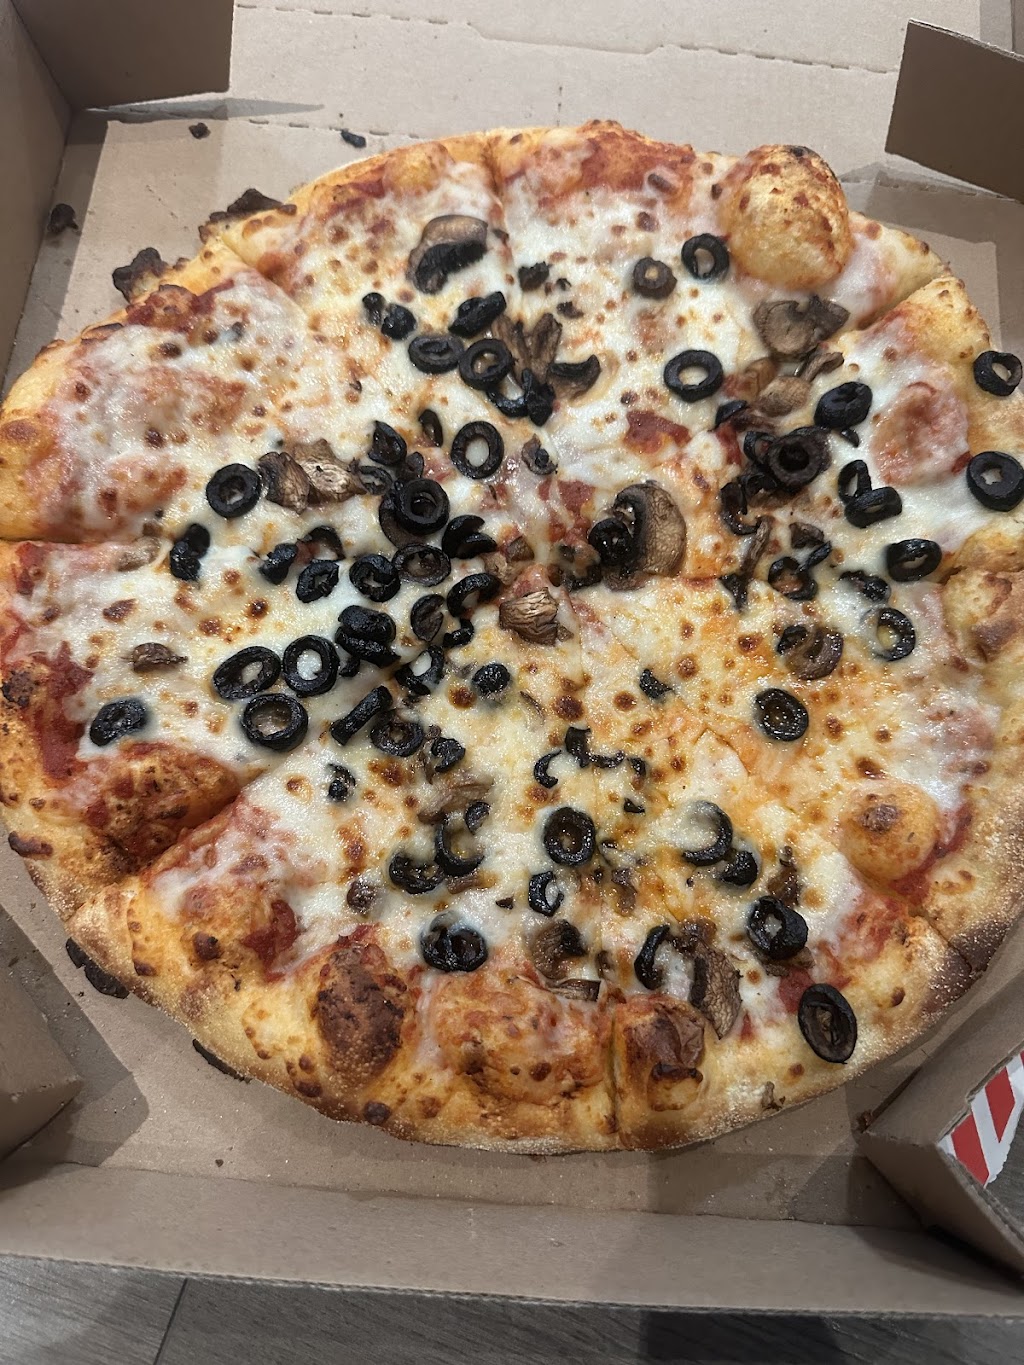 Dominos Pizza | 38487 Fremont Blvd, Fremont, CA 94536 | Phone: (510) 494-8094